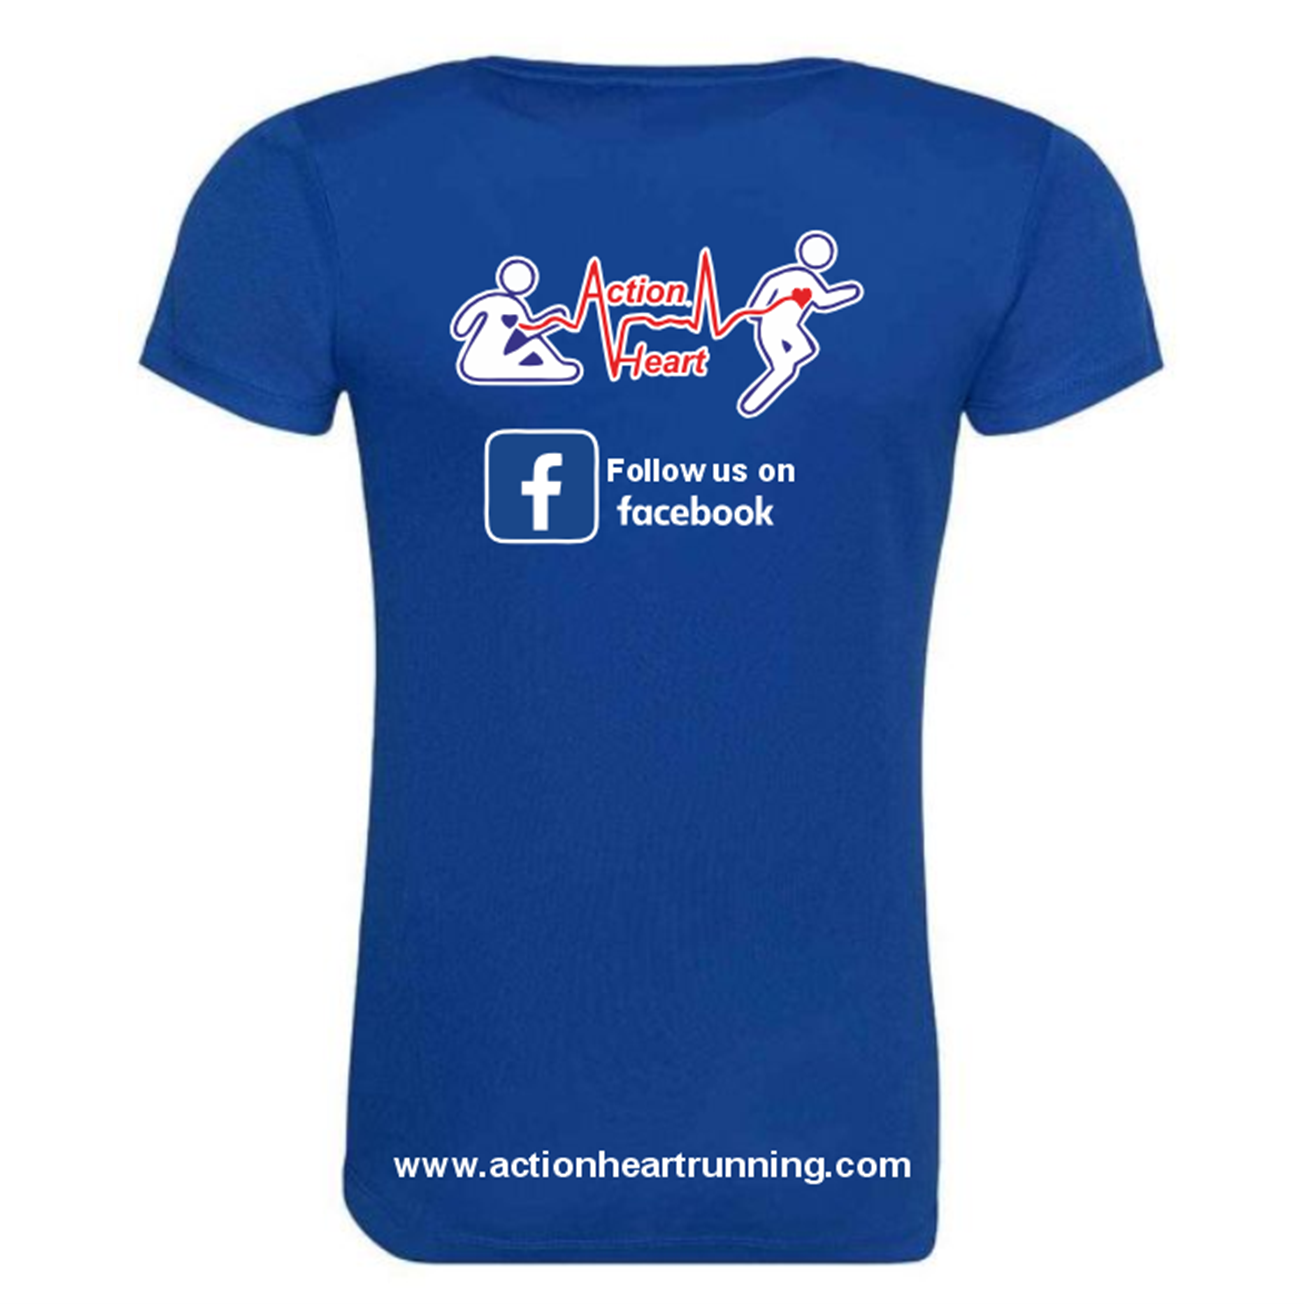 Action Heart Running Club Ladies T-Shirt [JC005]